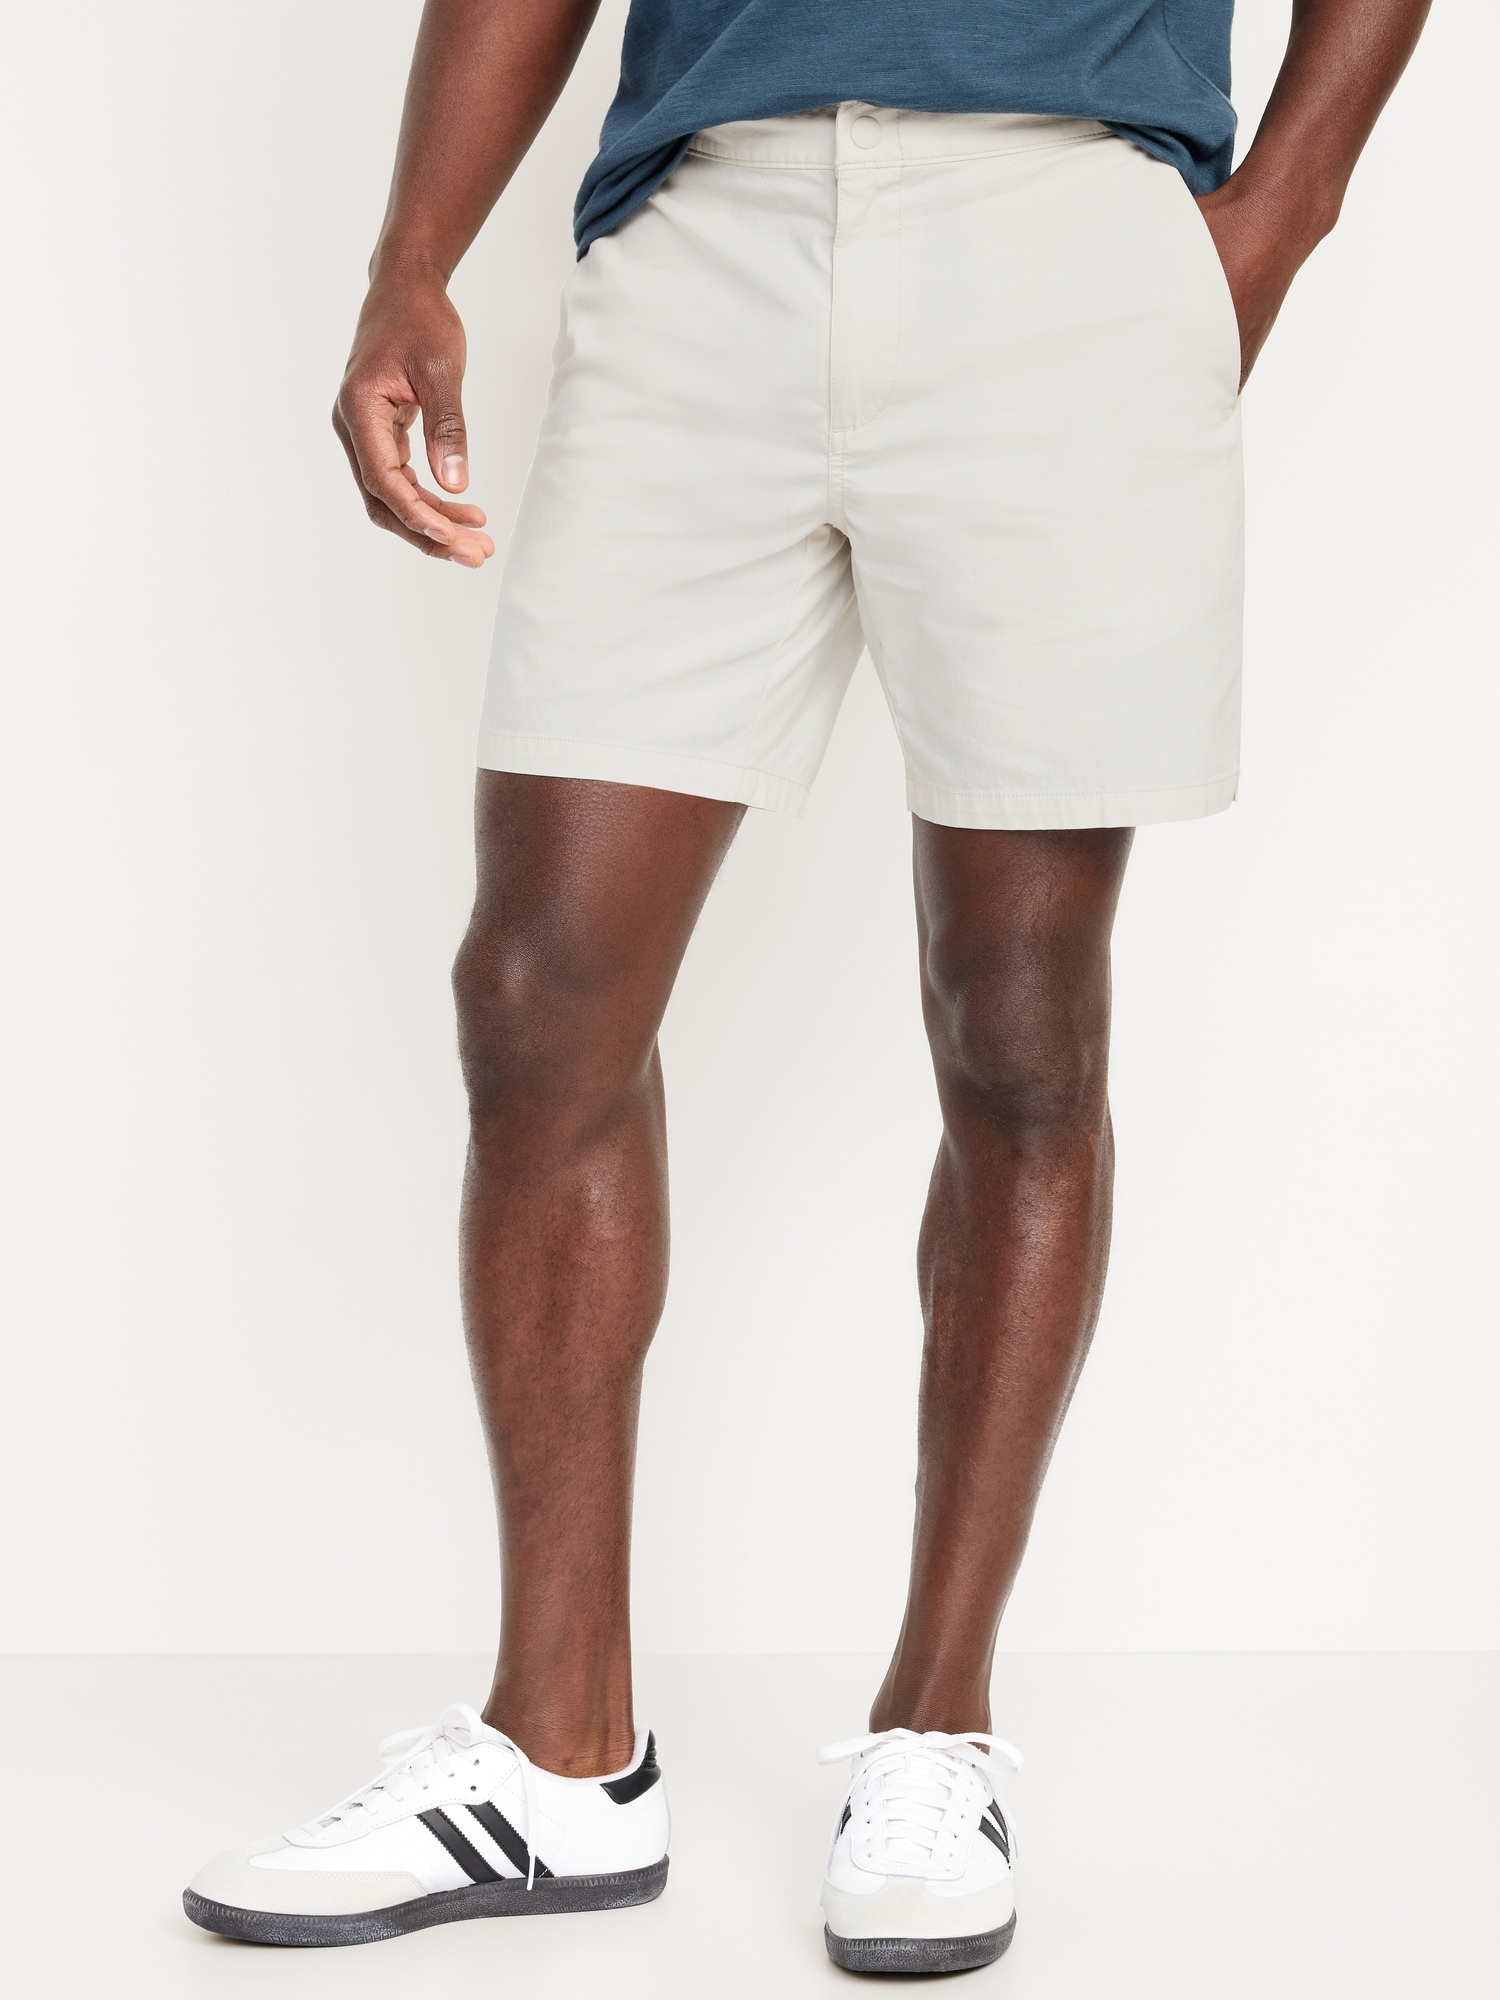 Slim Built-In Flex Tech Jogger Shorts -- 7-inch inseam Hot Deal